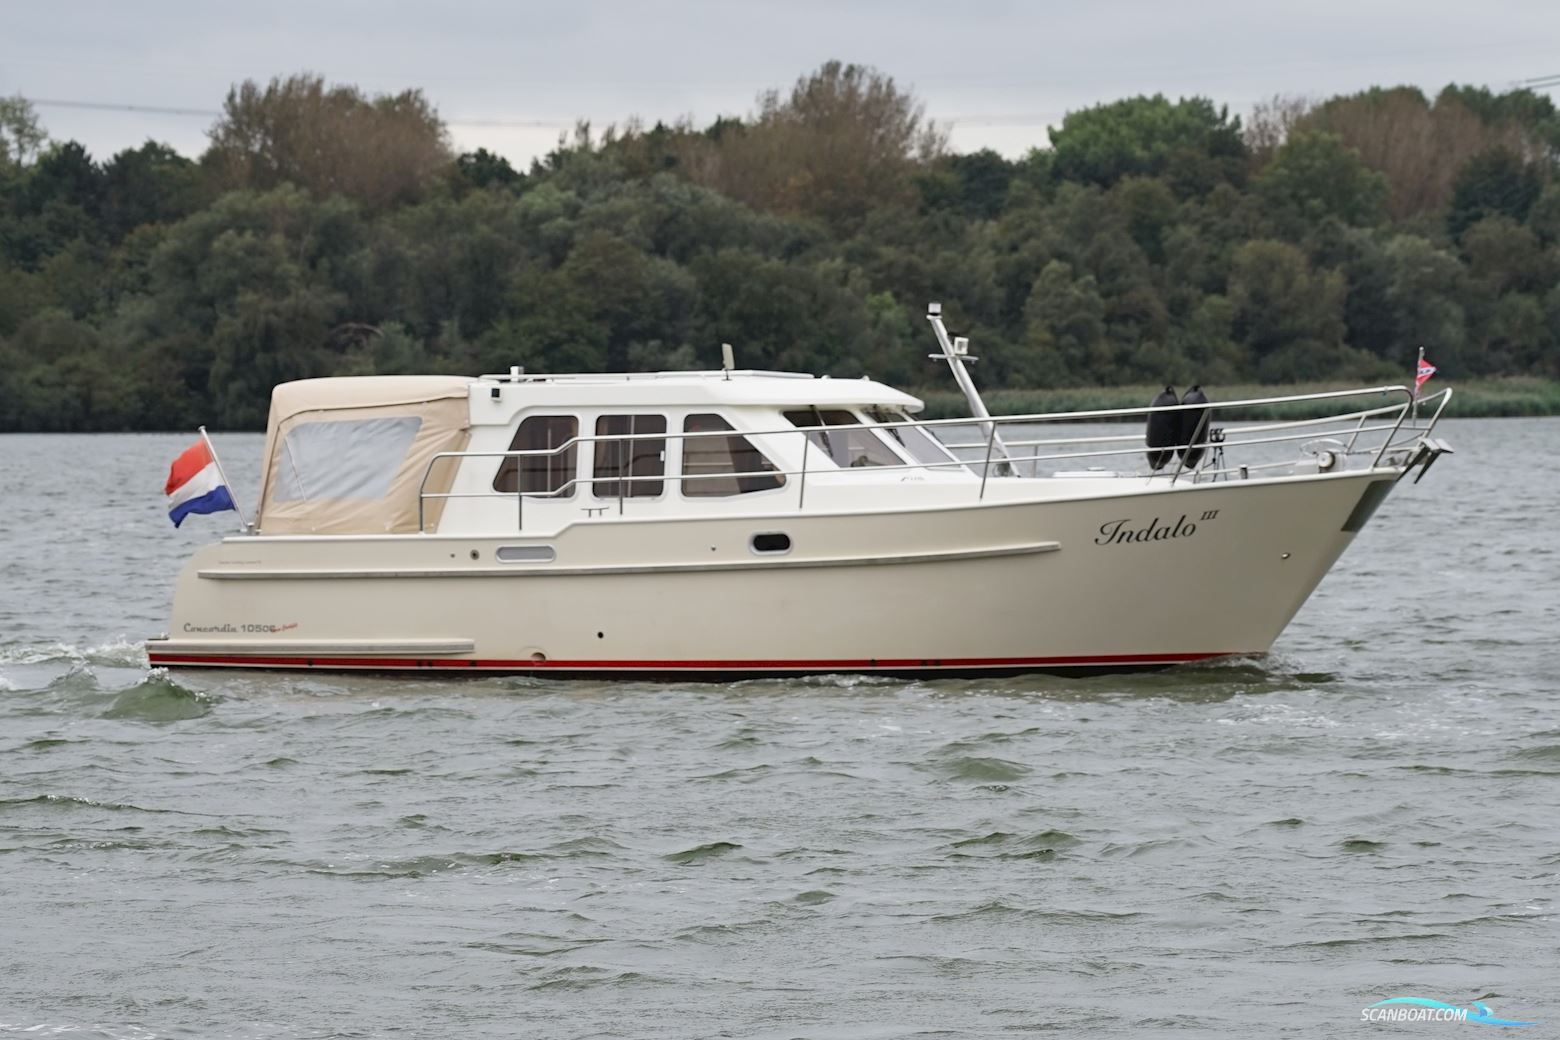 Concordia 105 OC Motor boat 2009, with Vetus Deutz engine, The Netherlands